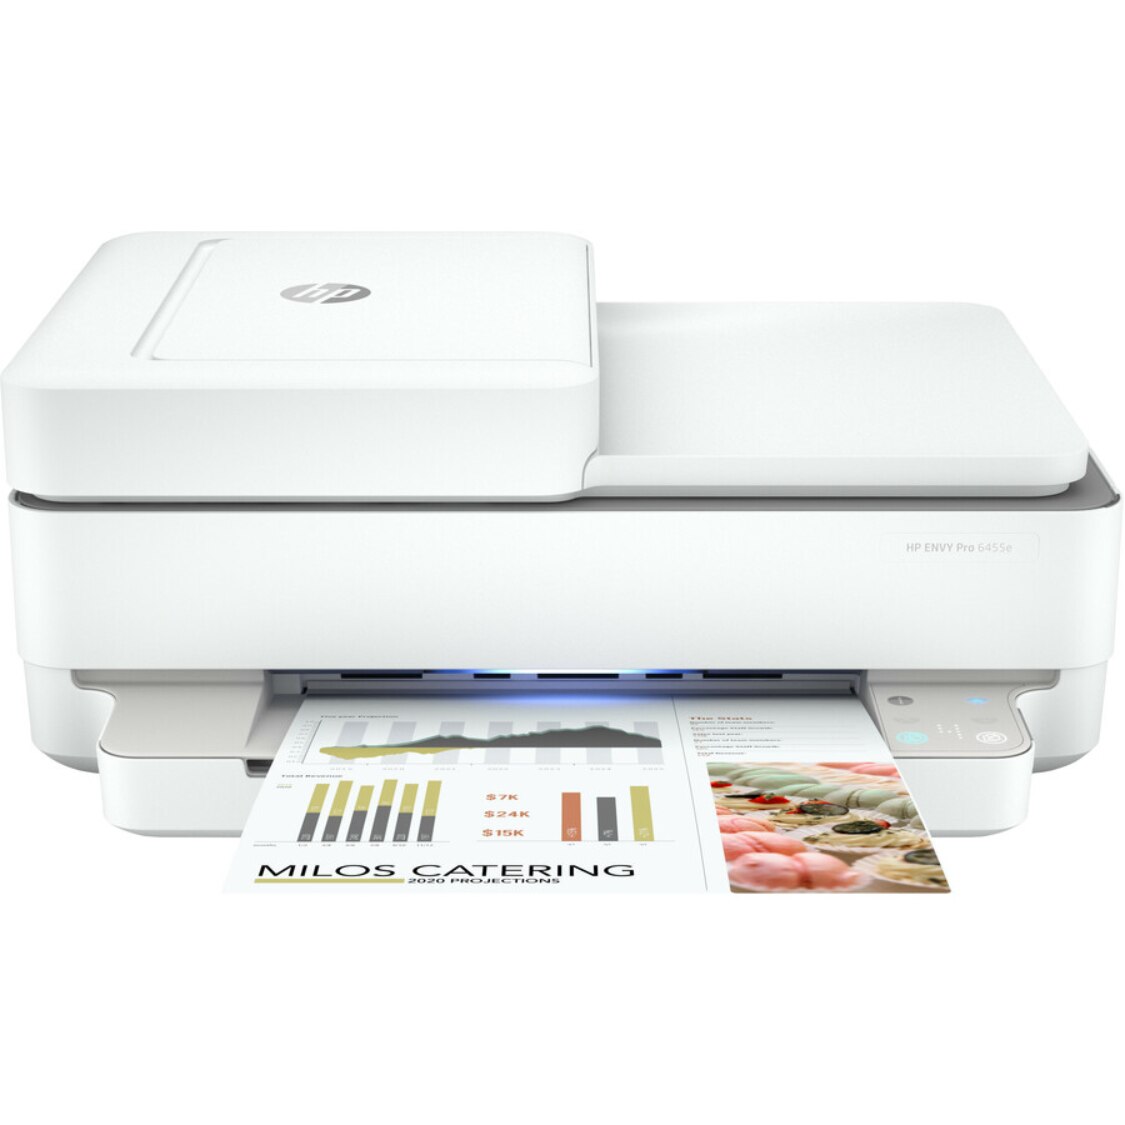 HP ENVY 6455e All-in-One Printer